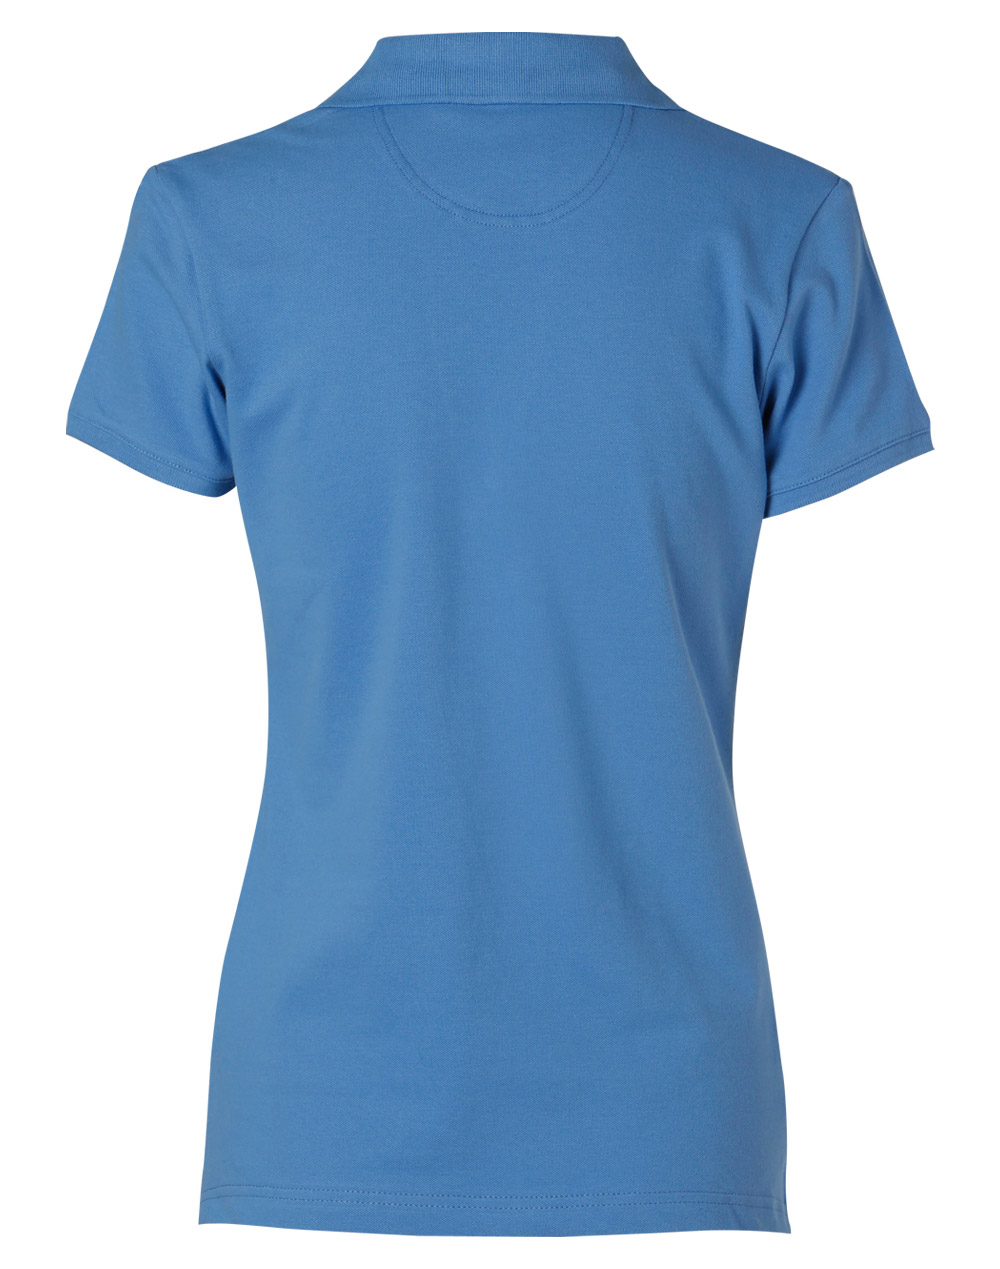 Custom Cotton (Azure Blue) Long Beach Ledies Polo Shirts Online Perth Australia